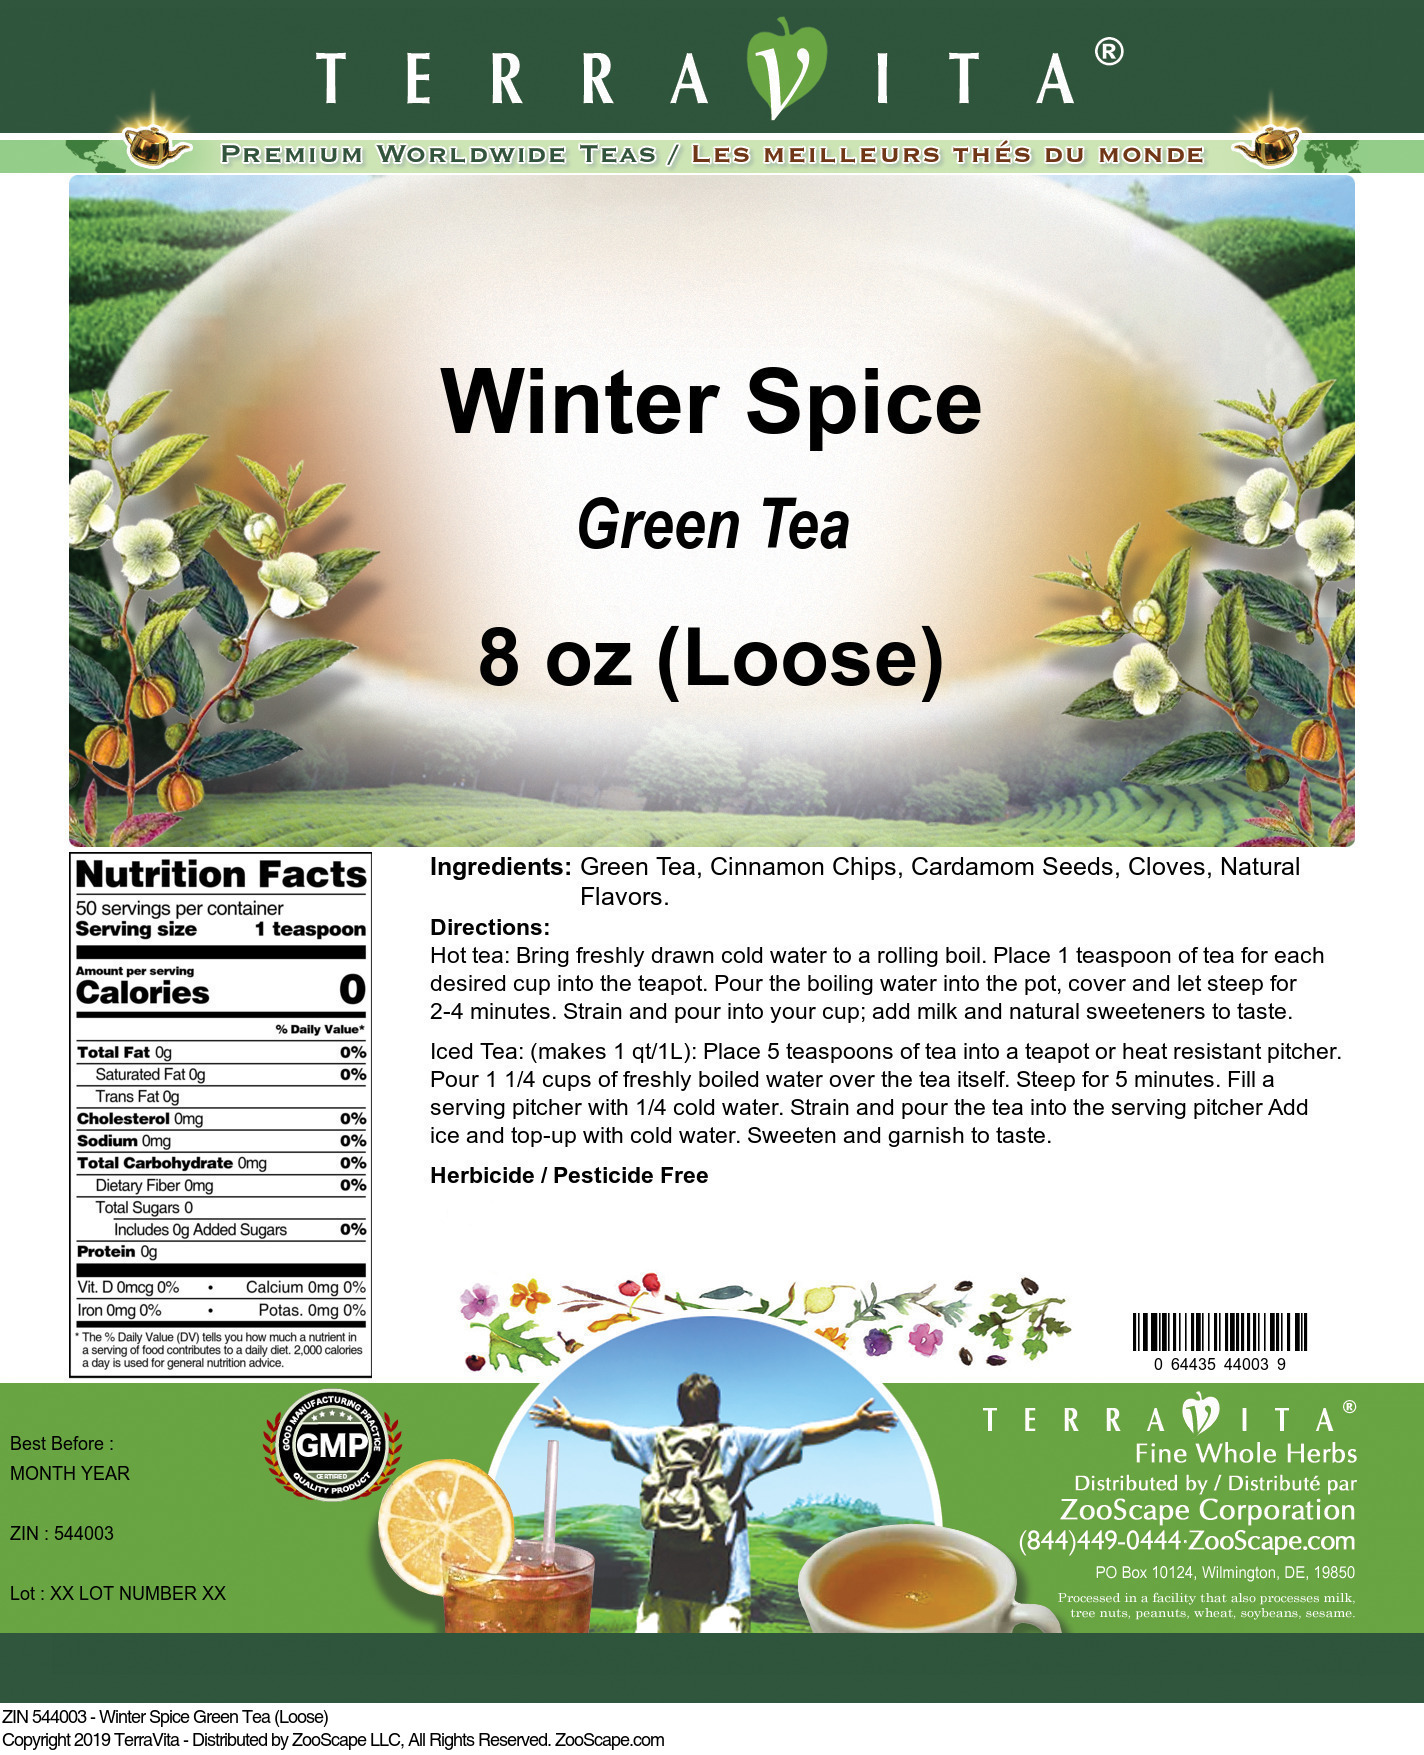 Winter Spice Green Tea (Loose) - Label